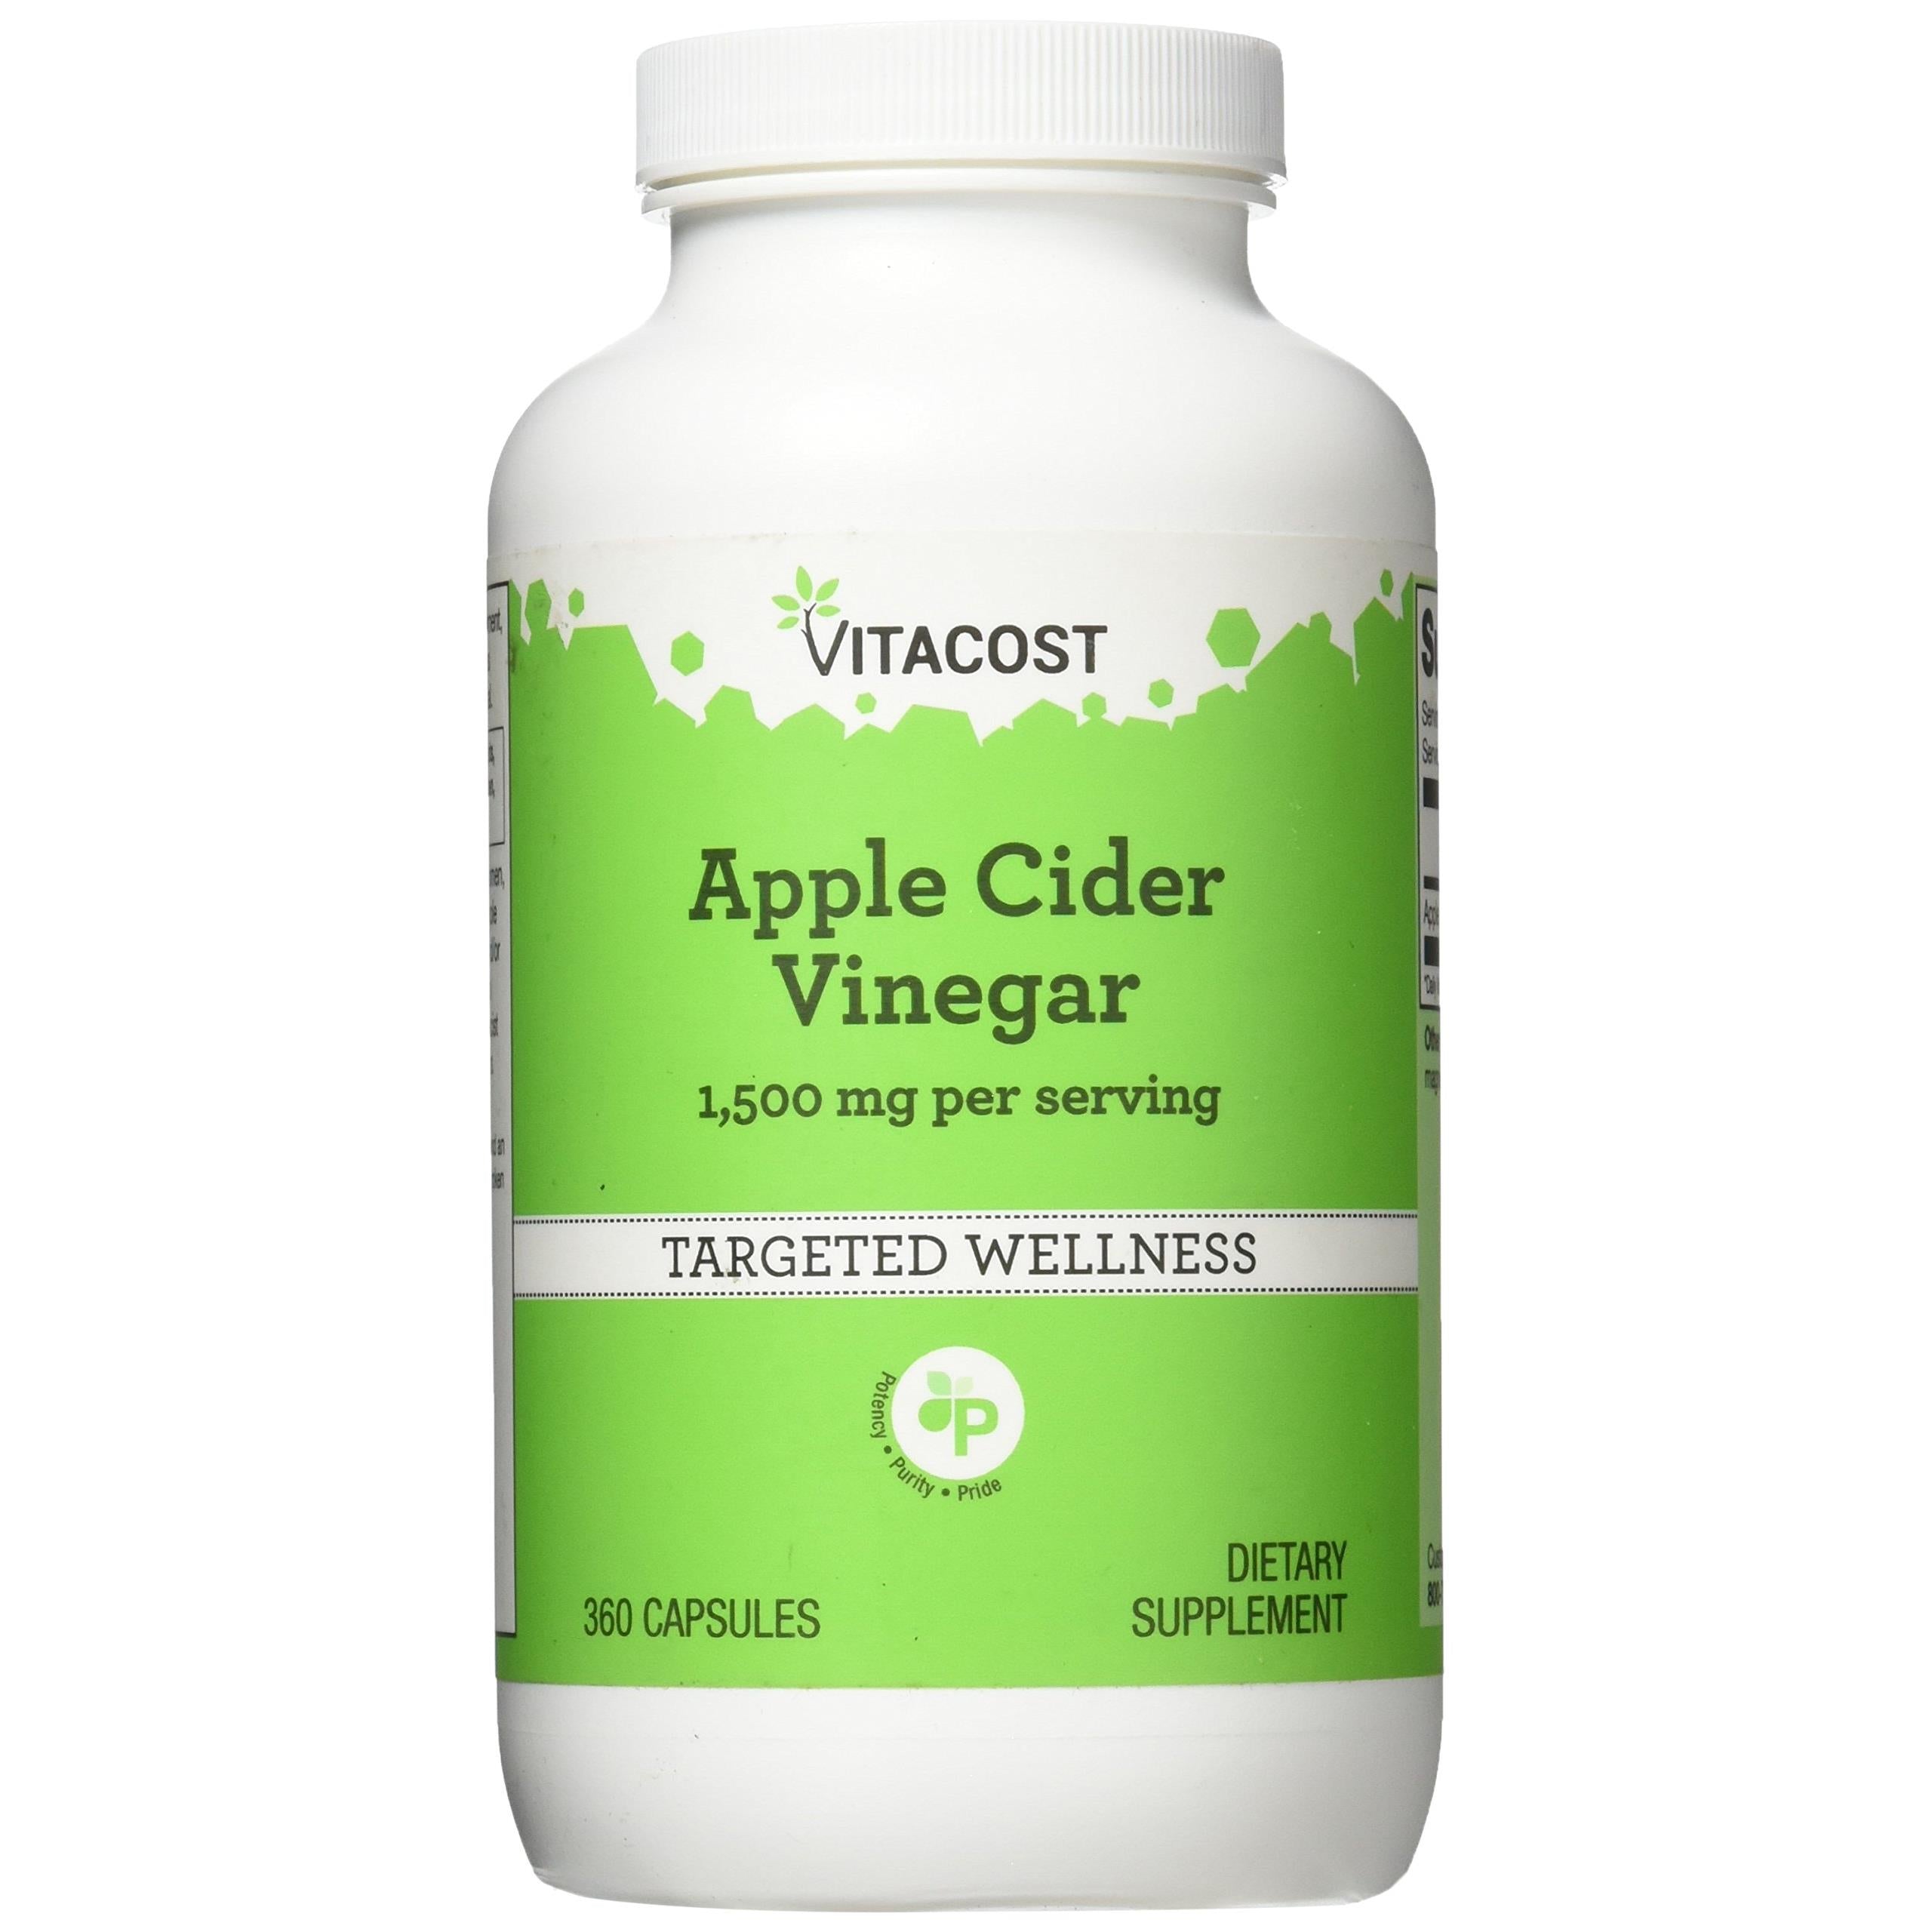 Vitacost Apple Cider Vinegar - 1,500 mg per Serving - 360 Capsules